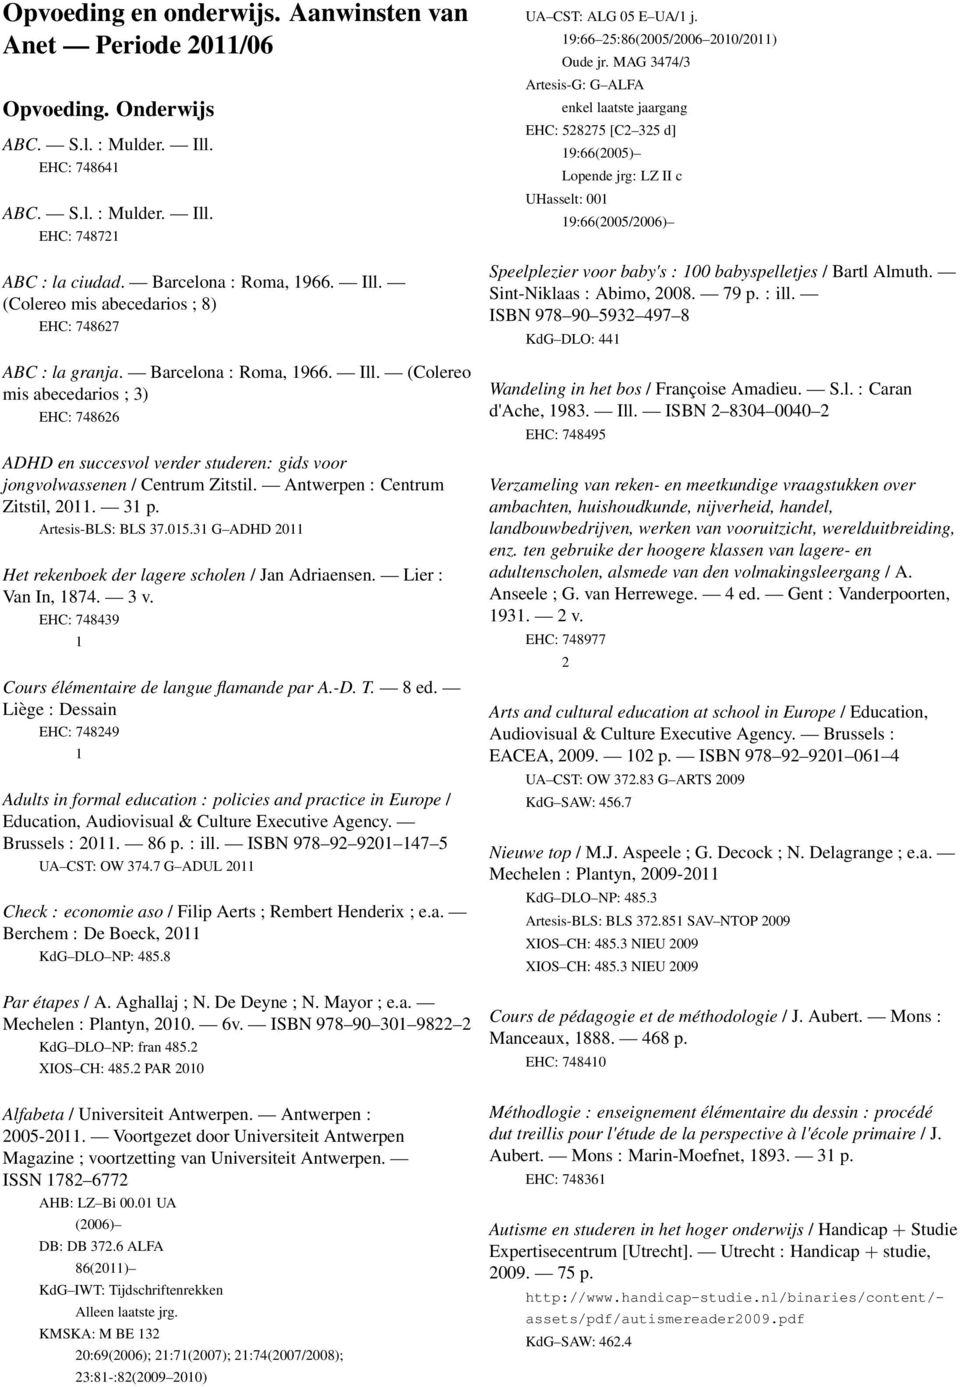 Artesis-BLS: BLS 37.05.3 G ADHD 0 Het rekenboek der lagere scholen / Jan Adriaensen. Lier : Van In, 874. 3 v. EHC: 748439 Cours élémentaire de langue flamande par A.-D. T. 8 ed.